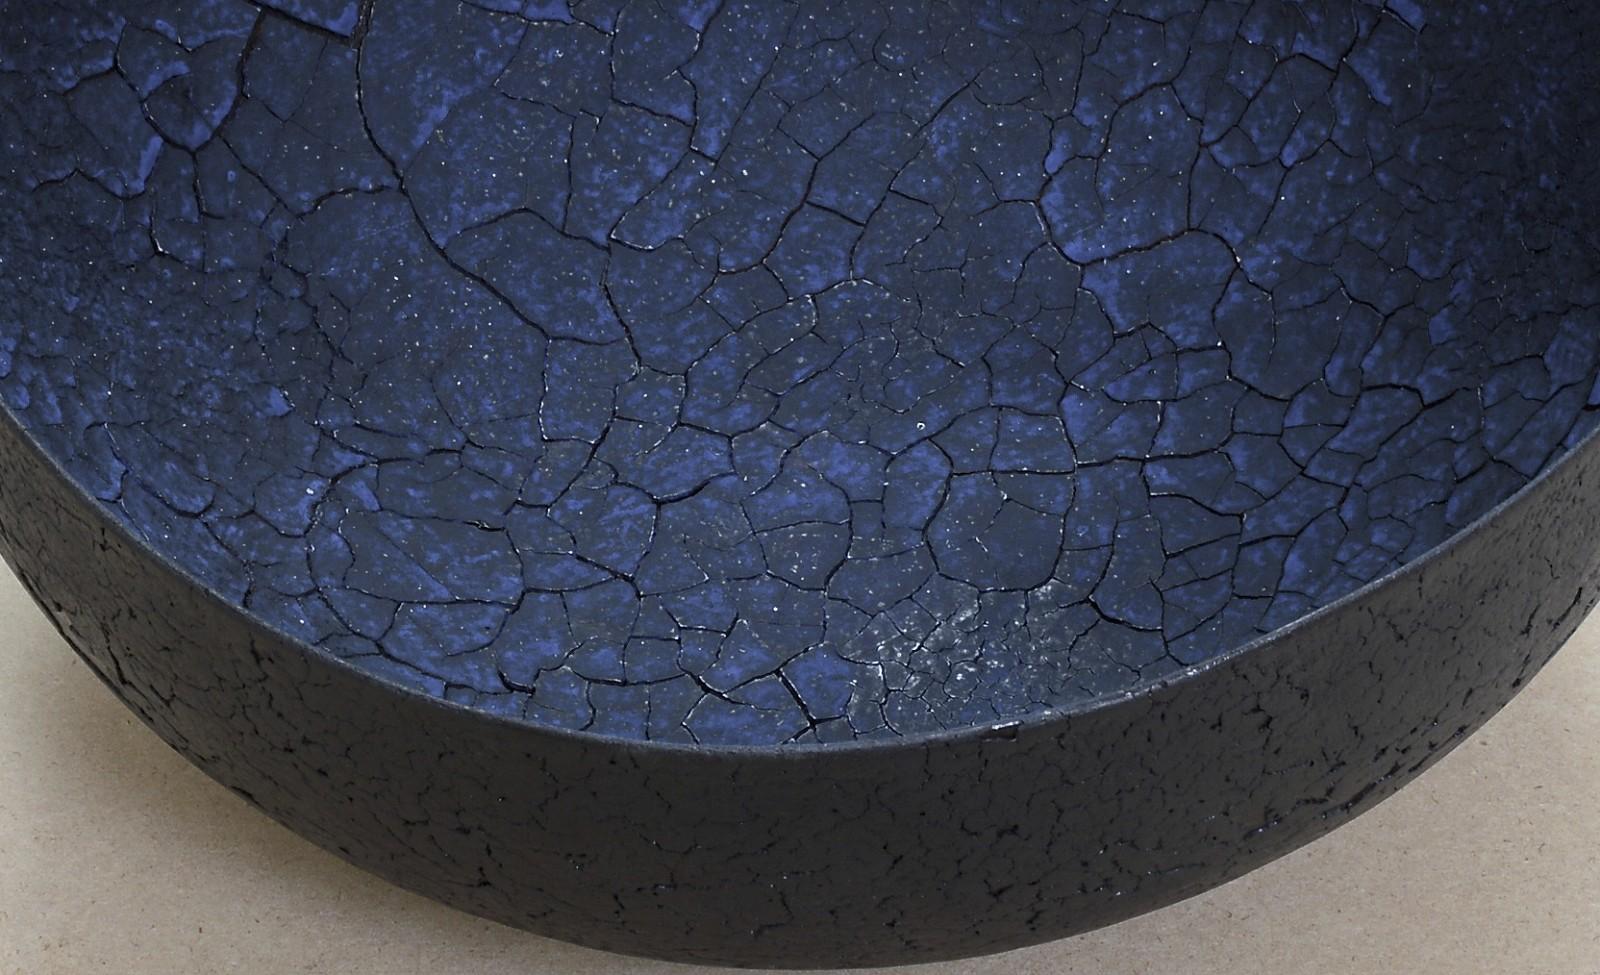 Untitled (Blue Bowl) - rich, textured, nature inspired, ceramic bowl vessel - Contemporary Sculpture by Steven Heinemann